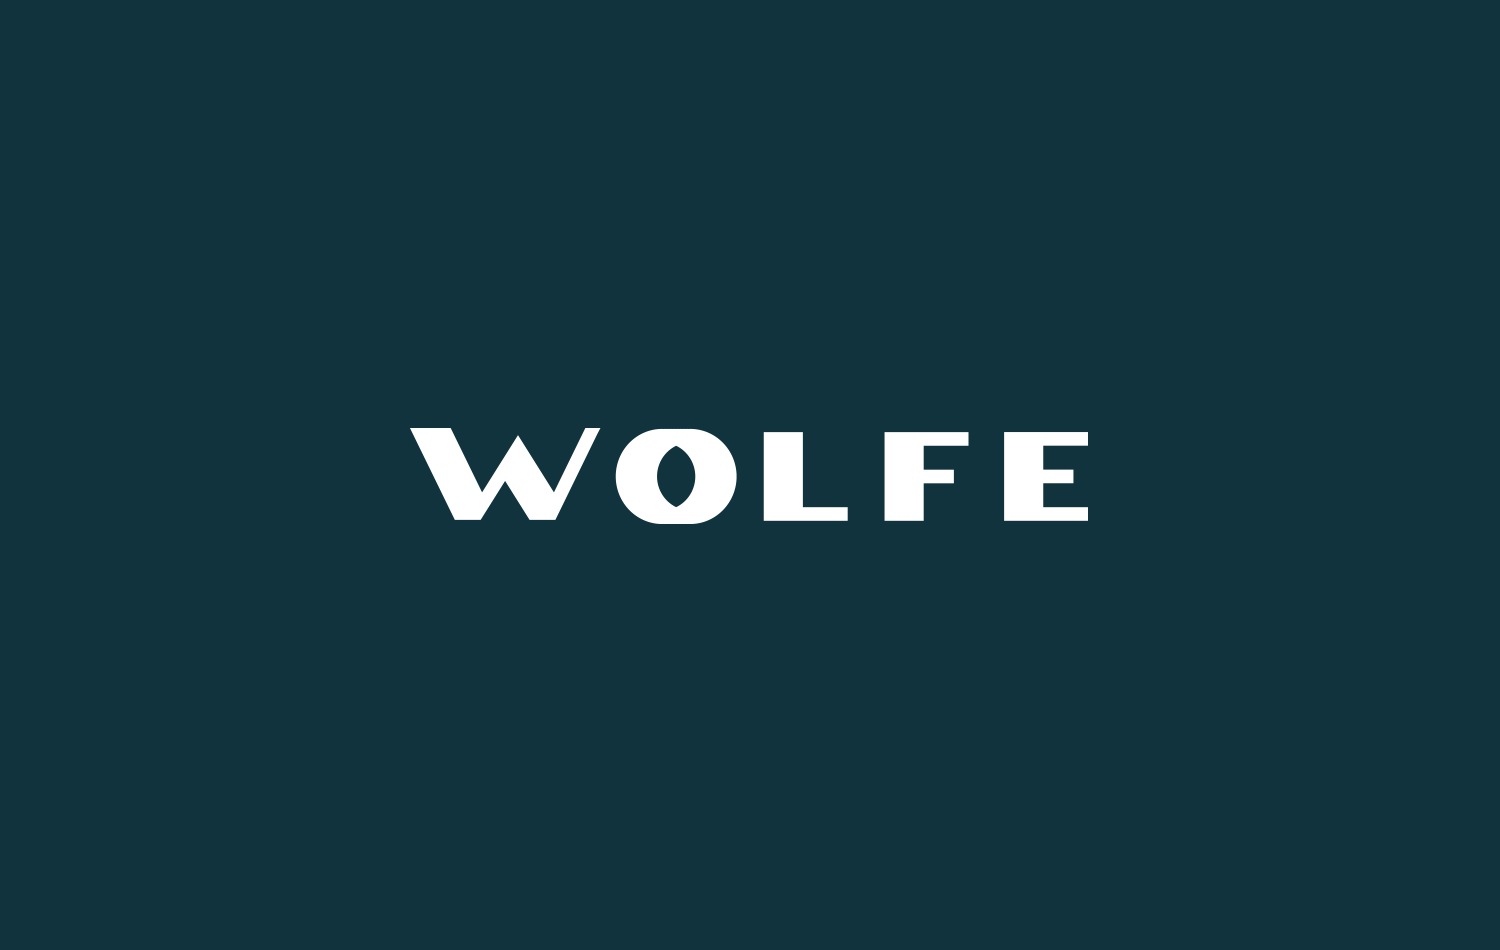 Wolfe Wordmark Explorations